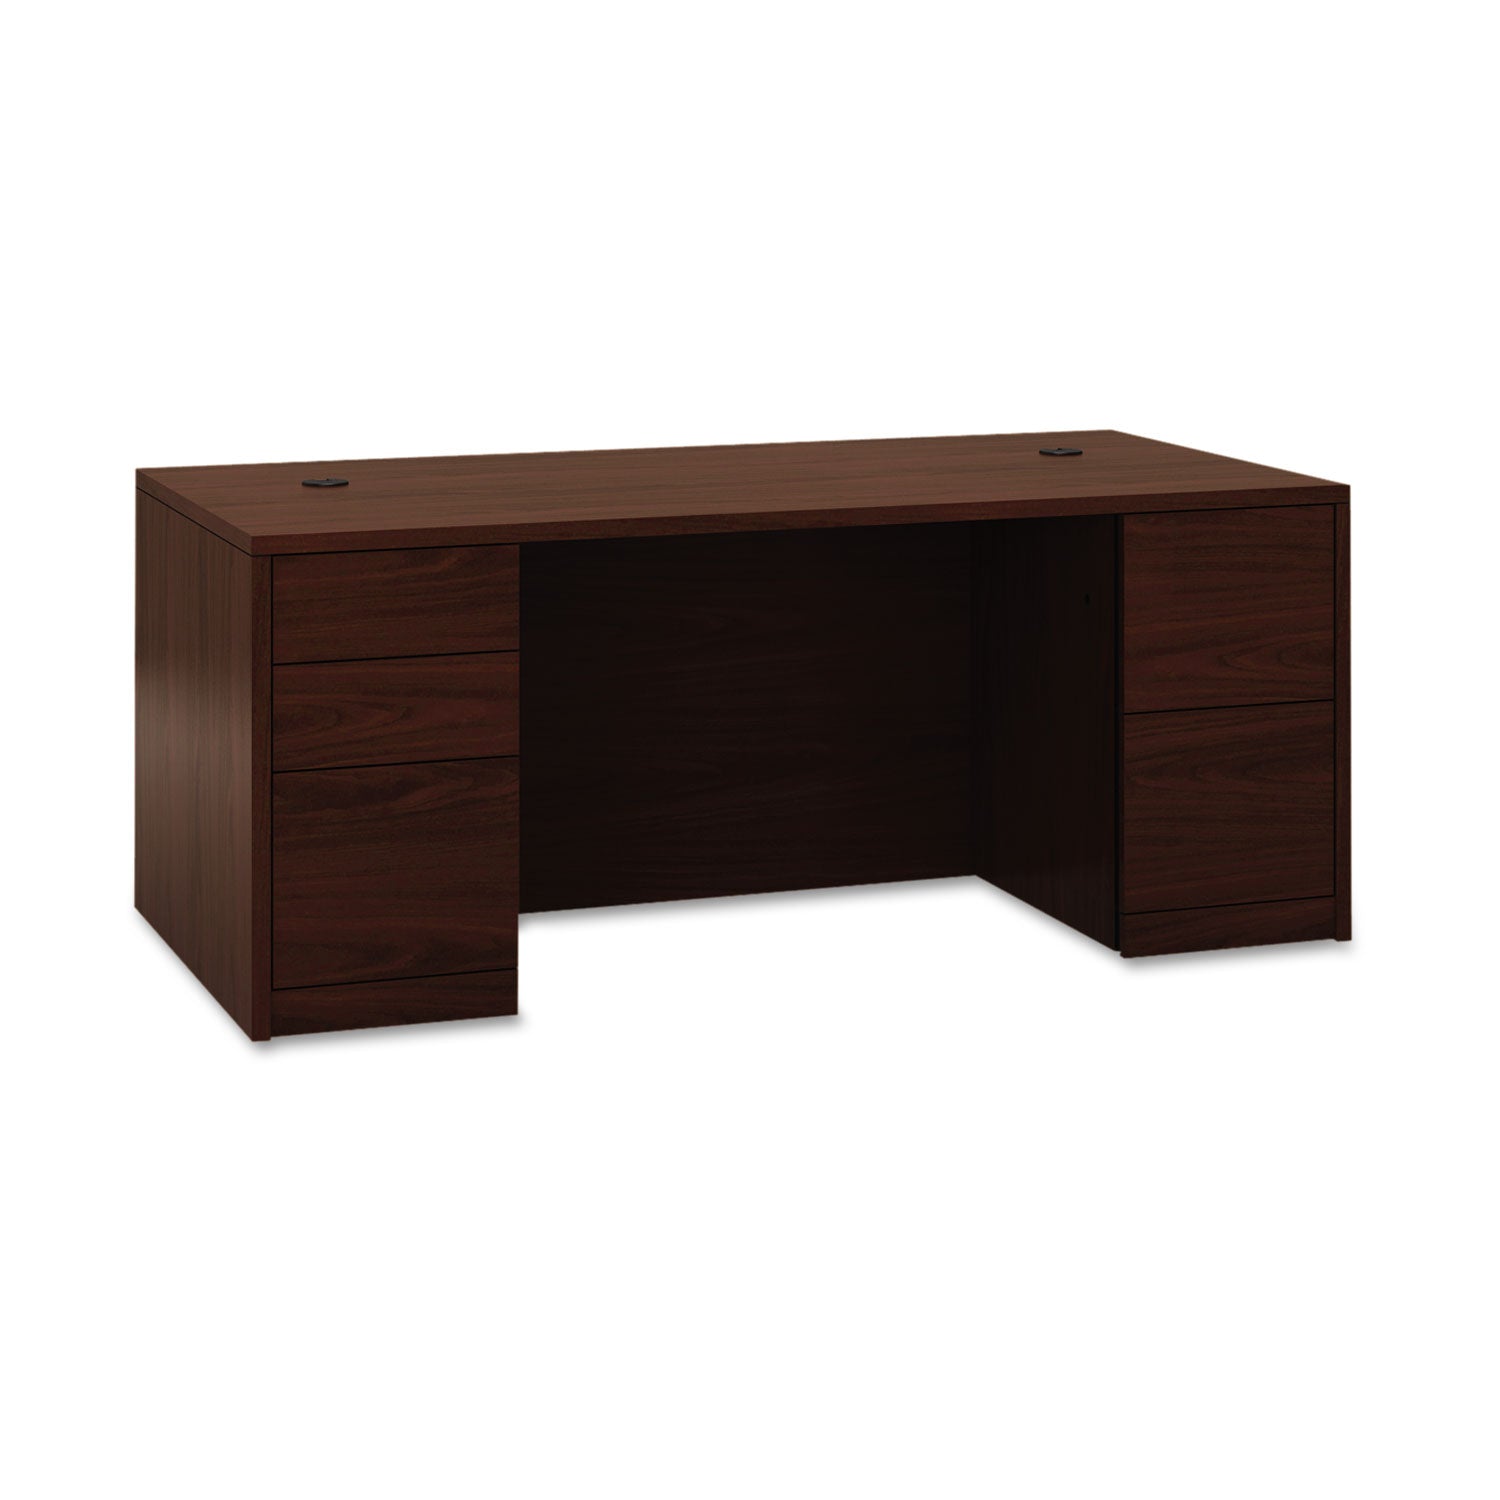 10500 Series Double Pedestal Desk with Full Pedestals, 72" x 36" x 29.5", Mahogany - 